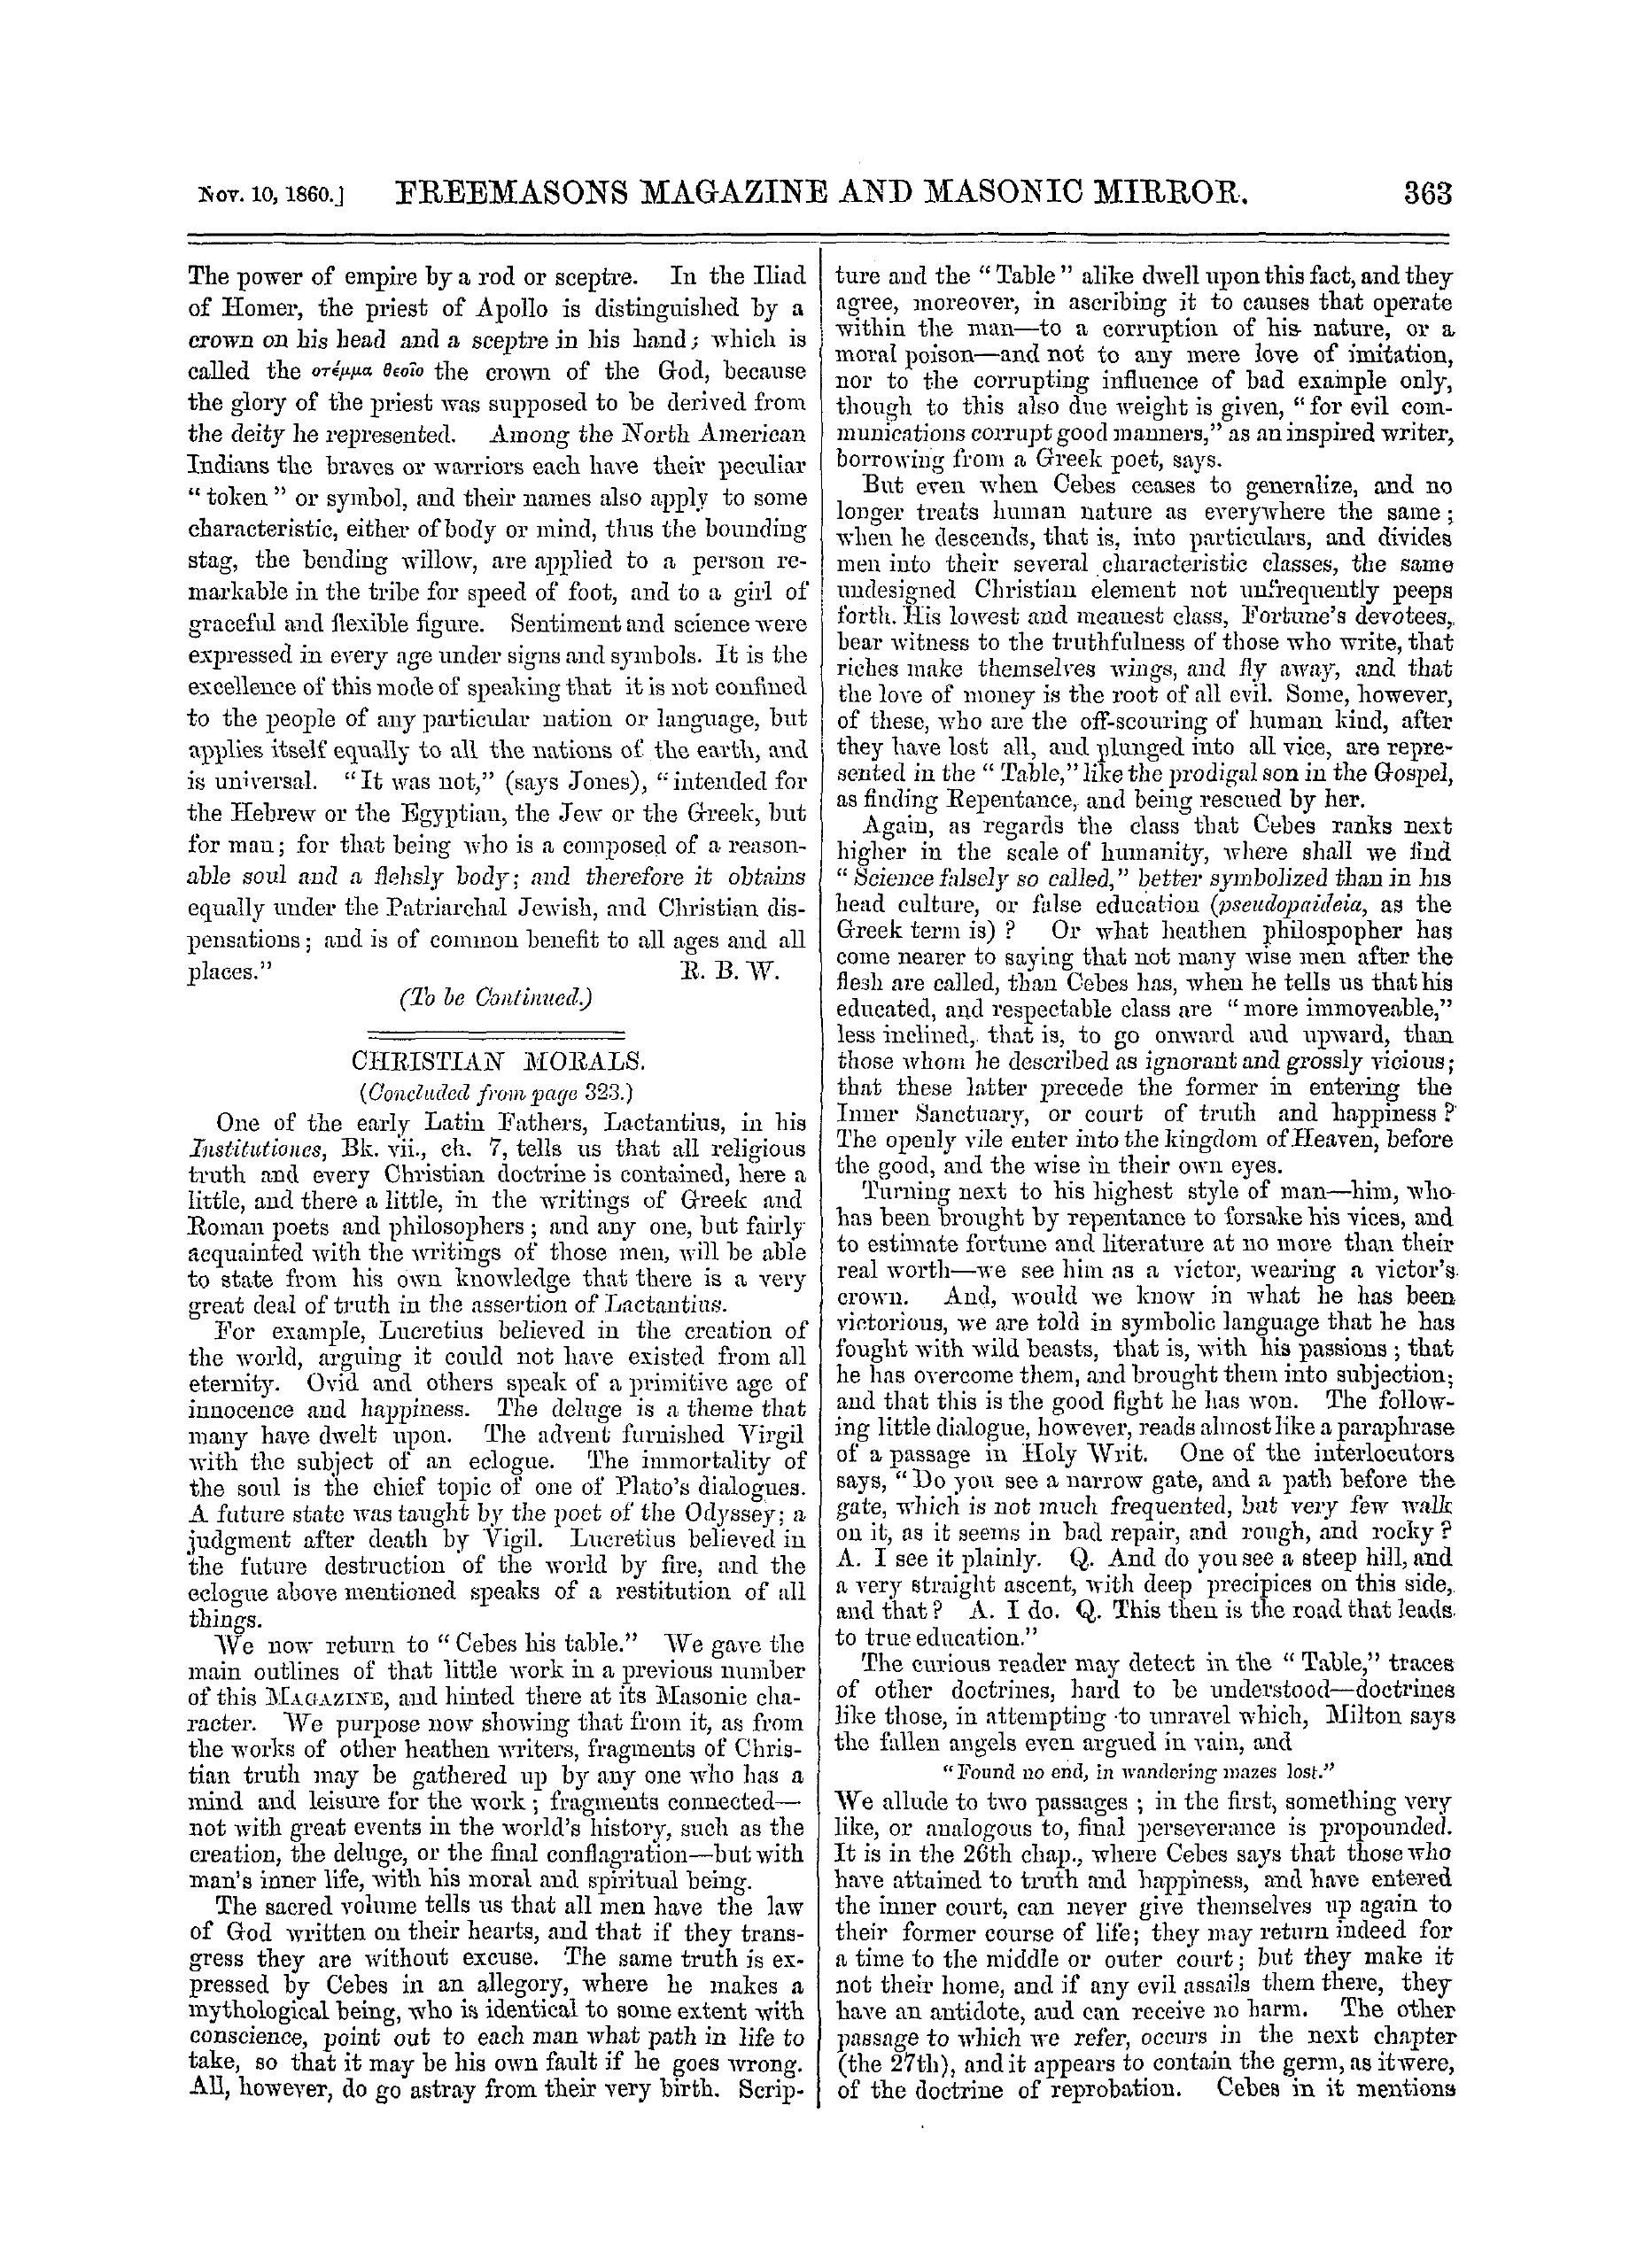 The Freemasons' Monthly Magazine: 1860-11-10 - Christian Morals.